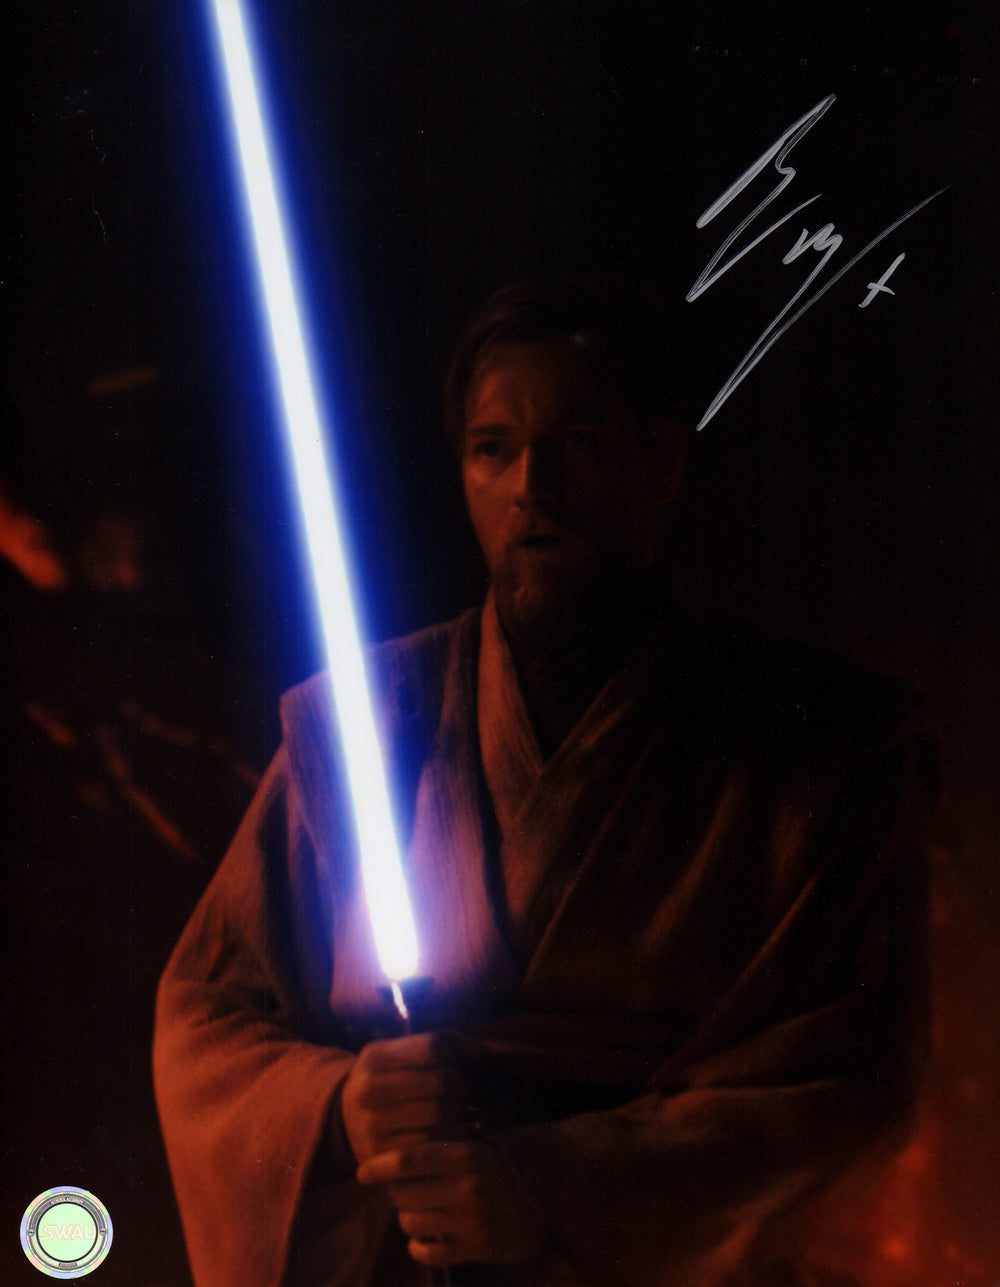 Ewan McGregor as Obi-Wan Kenobi from Star Wars Episode III: Revenge of the Sith Signed 11x14 (SWAU) Photo